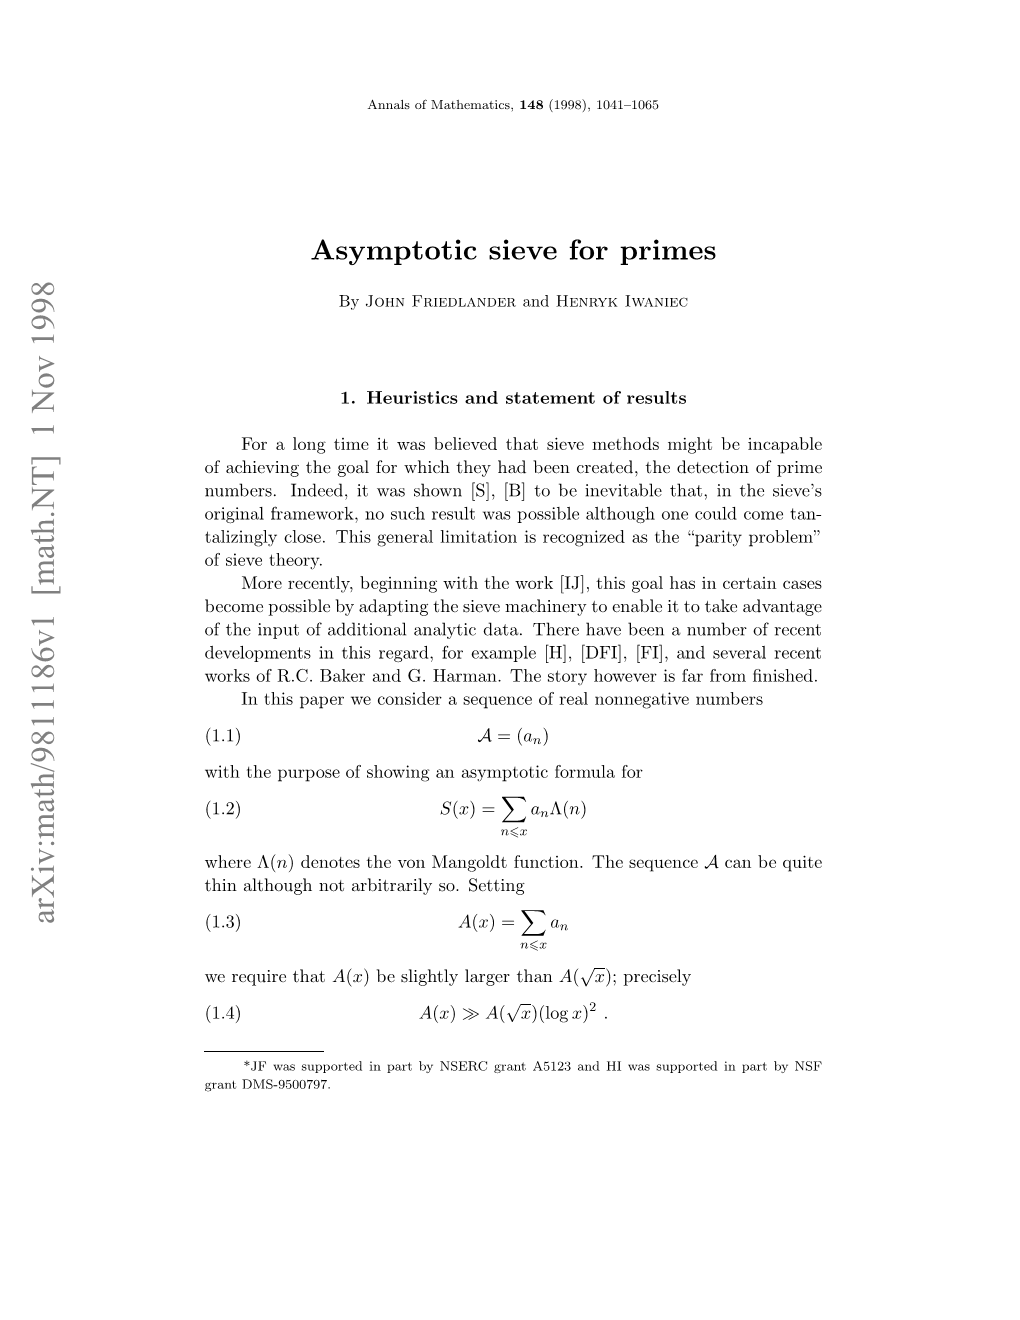 Asymptotic Sieve for Primes 1043